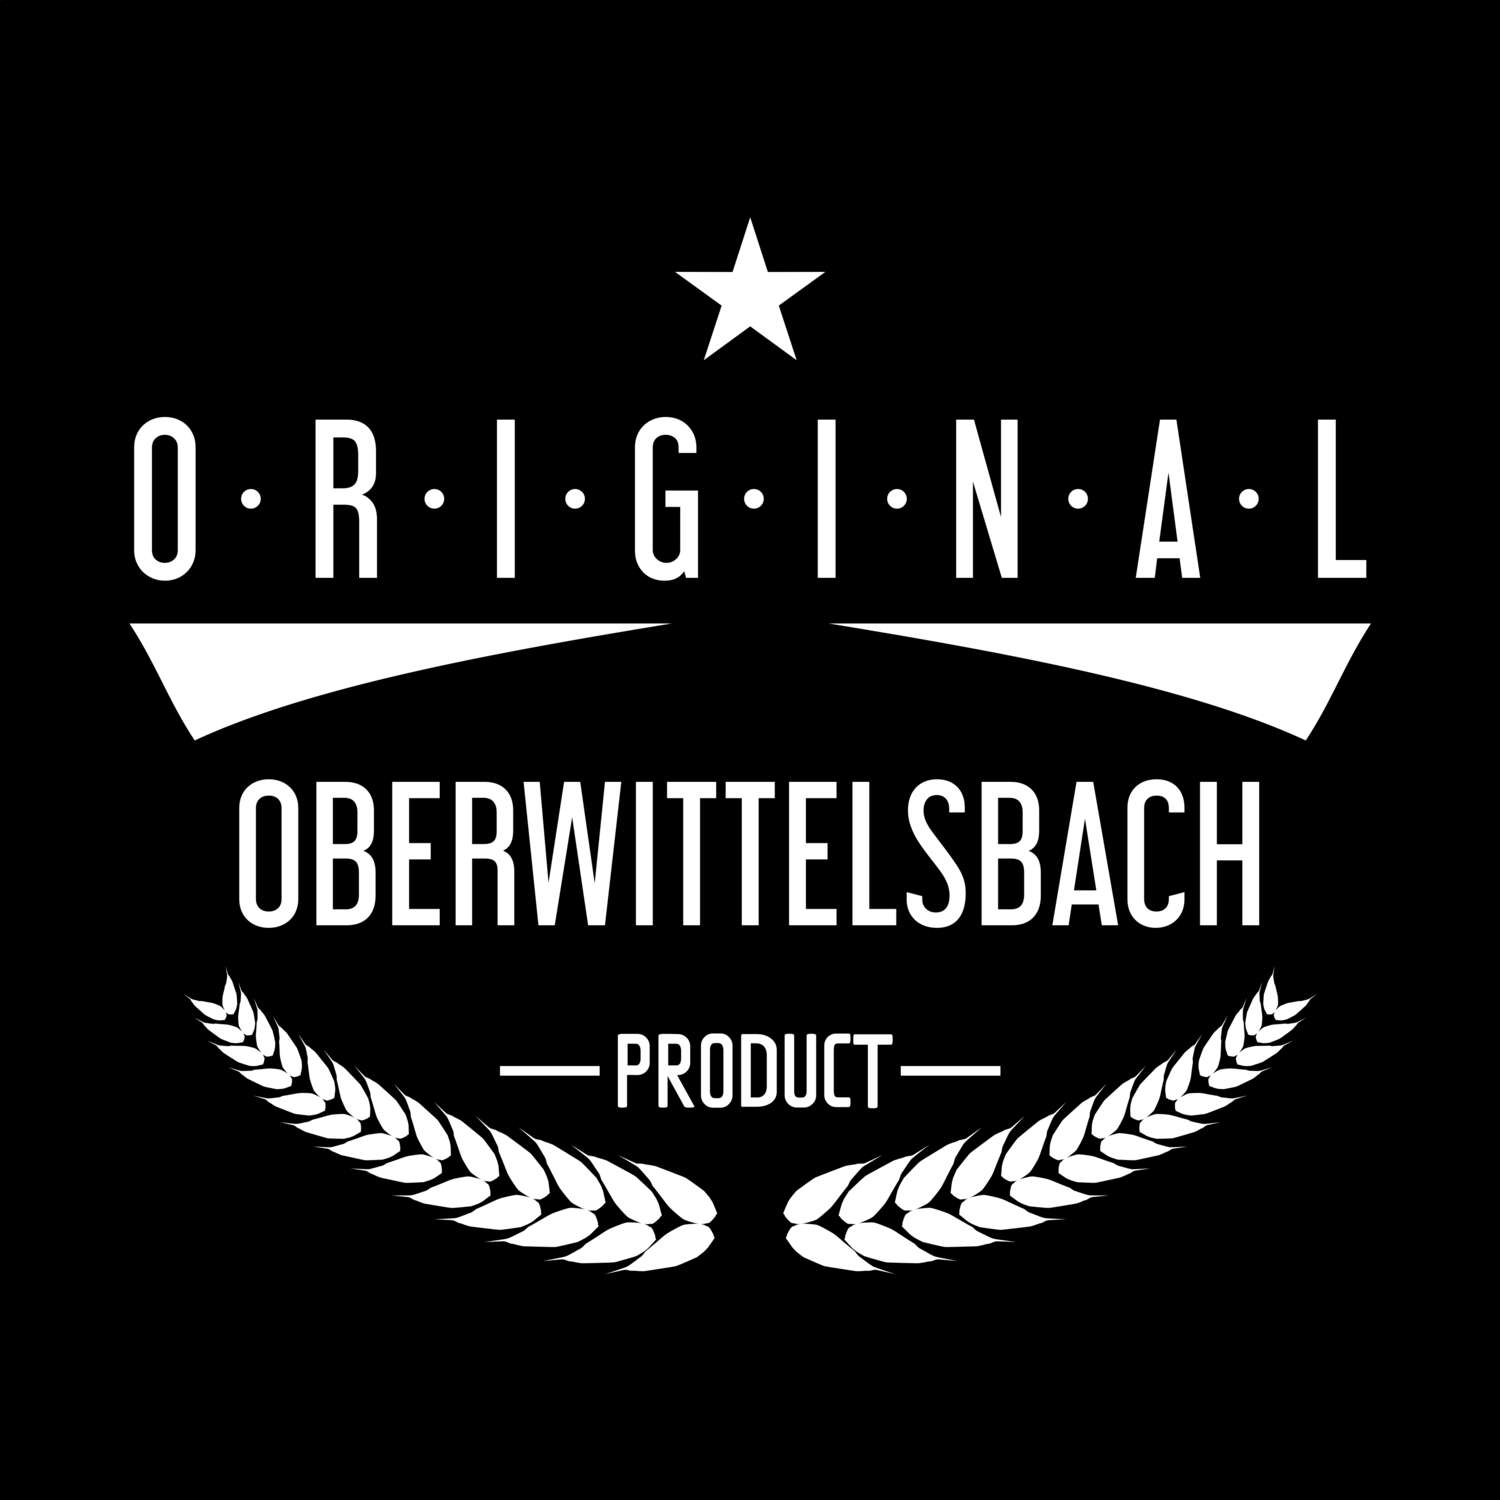 Oberwittelsbach T-Shirt »Original Product«